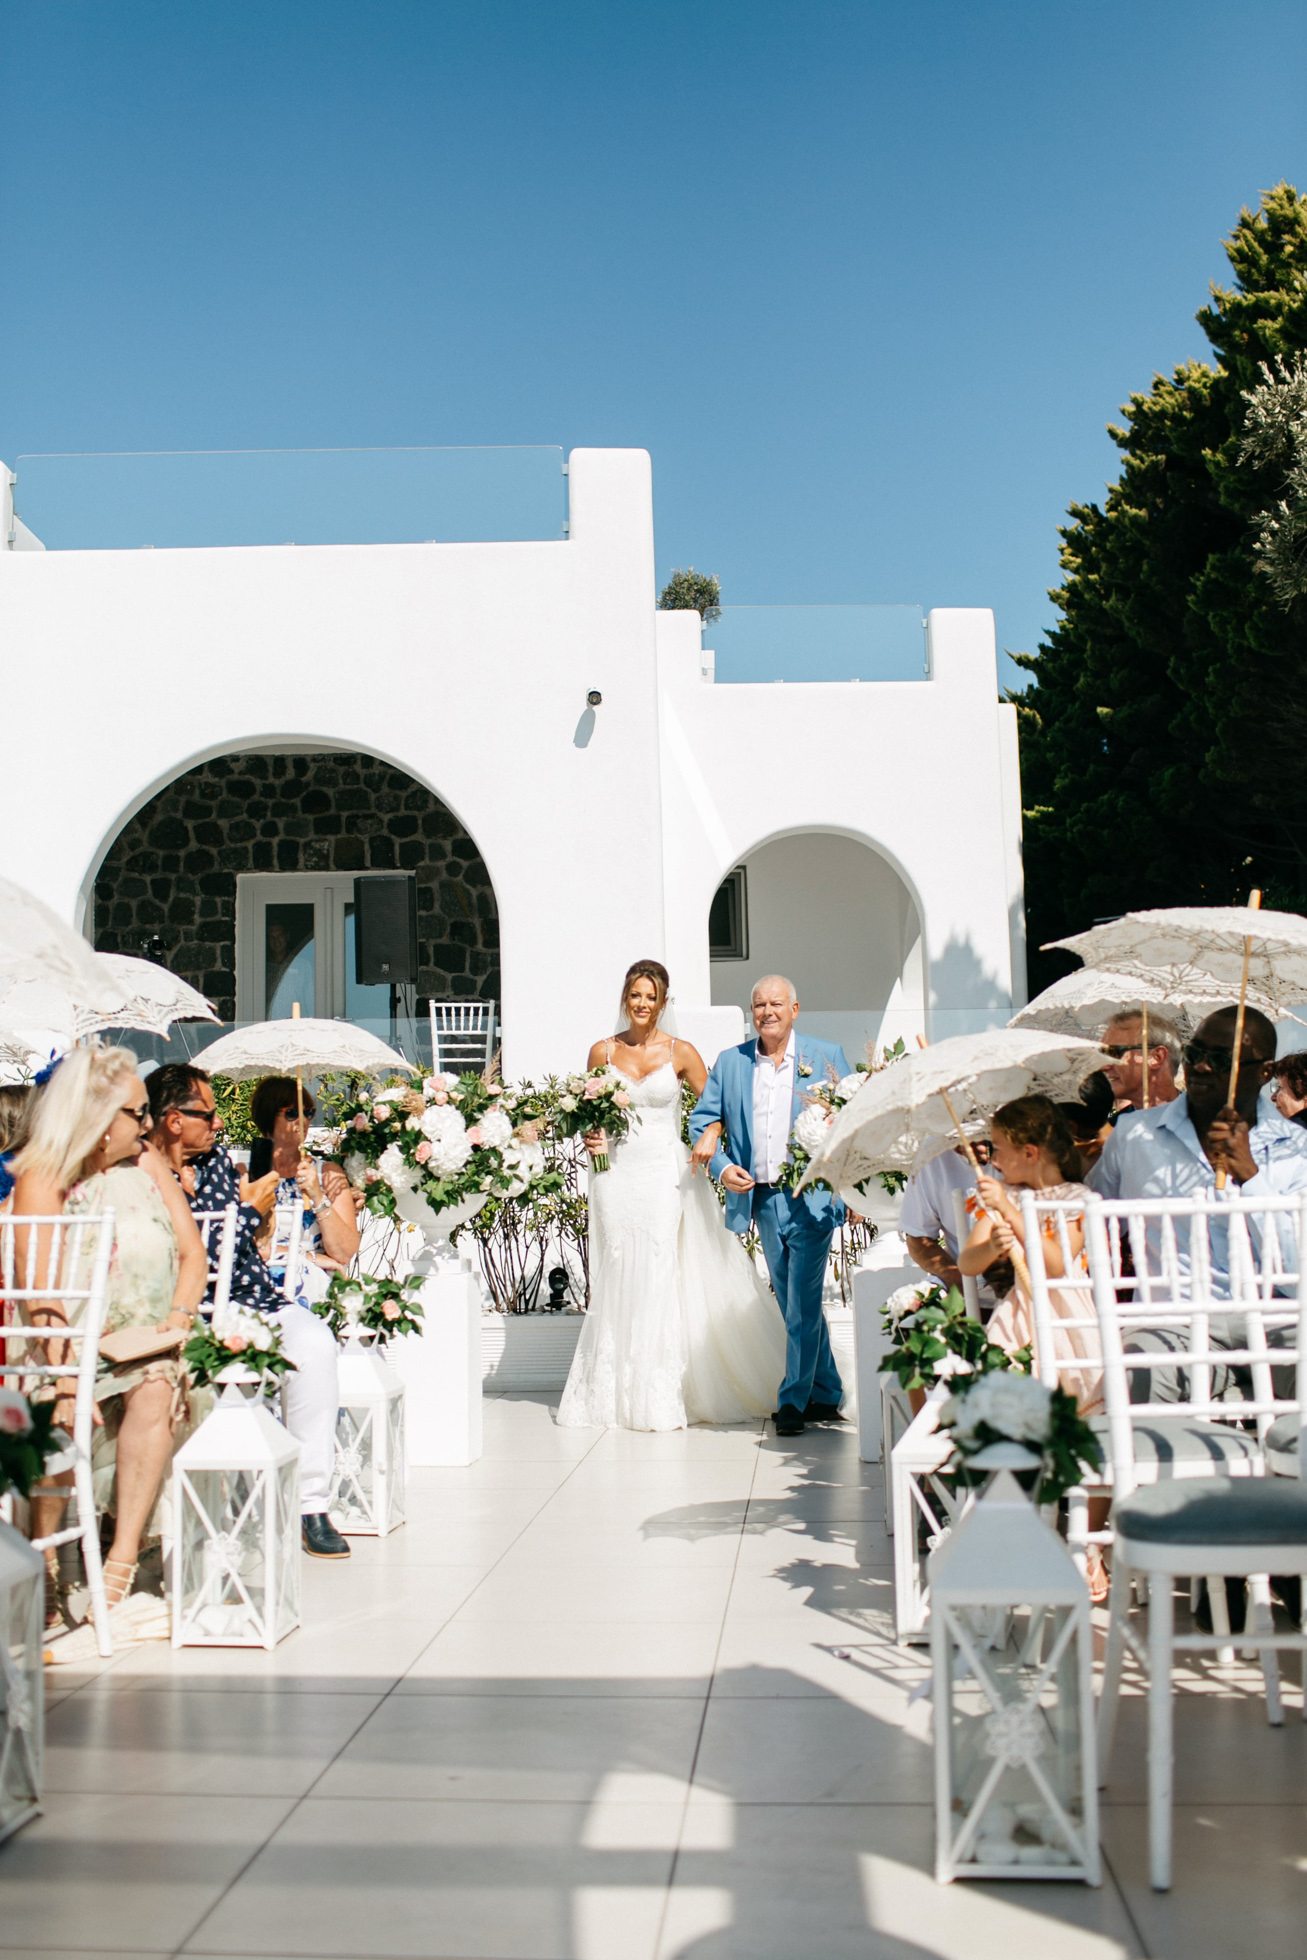 Bride walking down the isle at Le Ciel wedding estate in Santorini island, Greece.